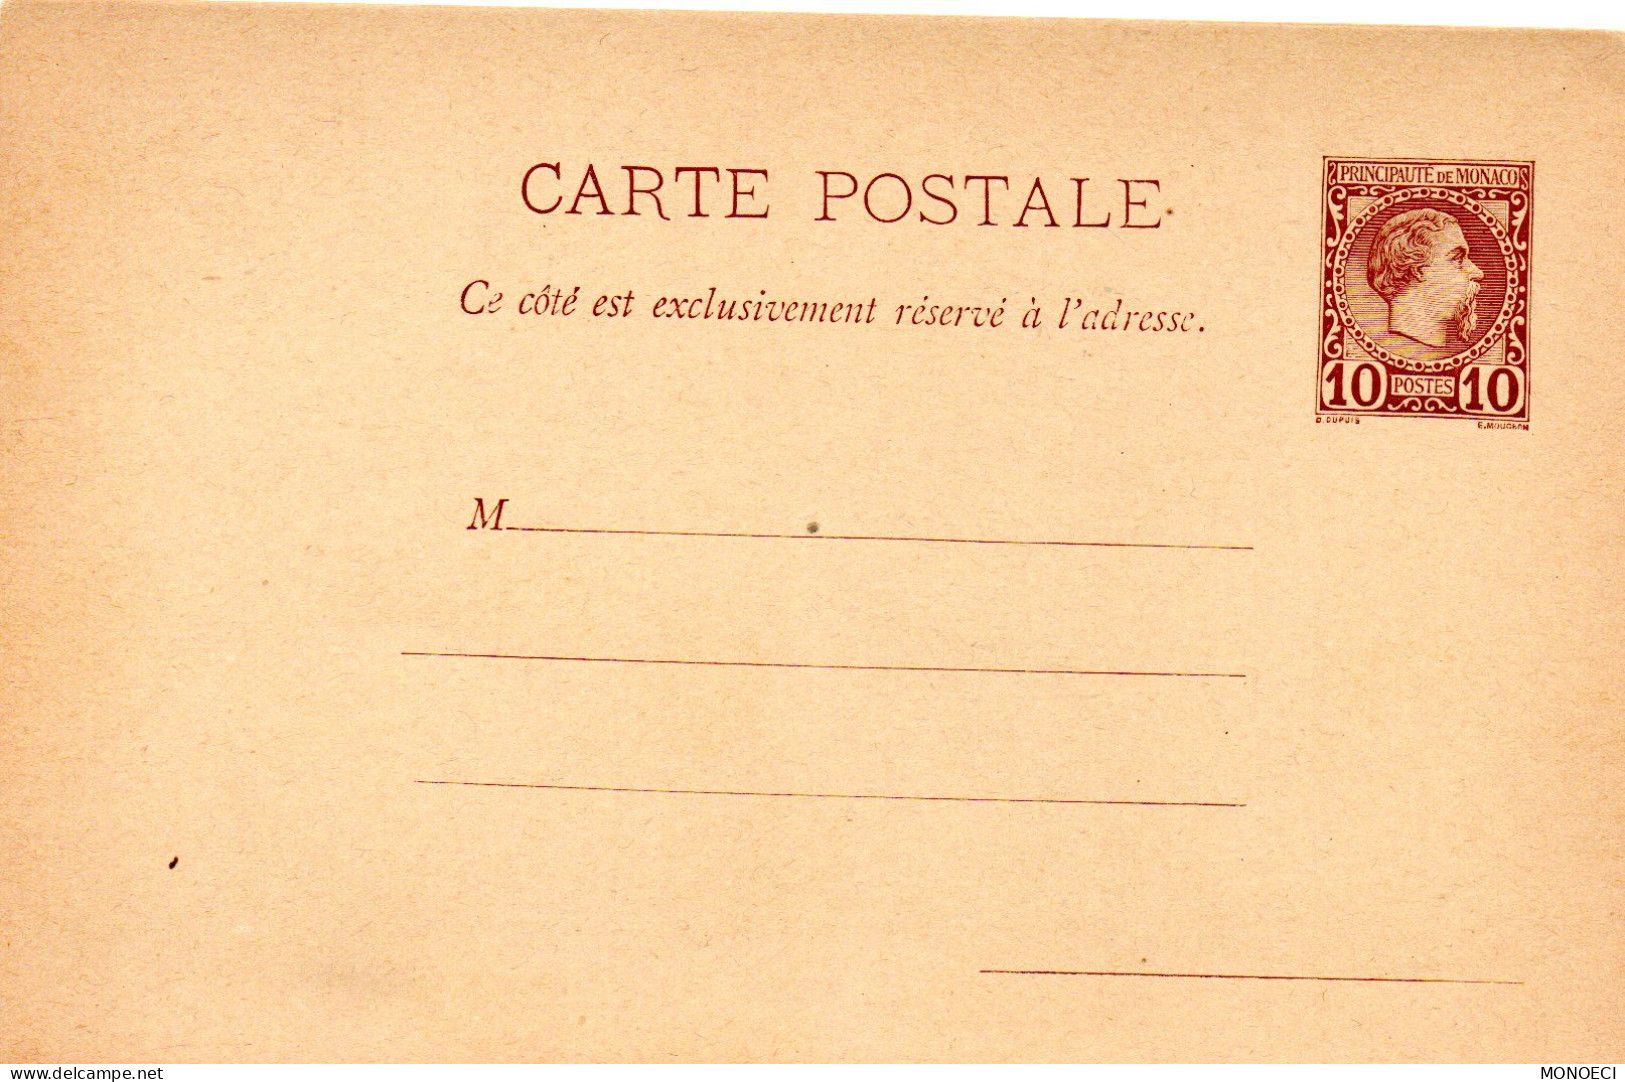 MONACO -- MONTE CARLO -- Entier Postal -- Carte Postale -- 10 C. Brun Sur Jaune Paille Prince Charles III - Interi Postali